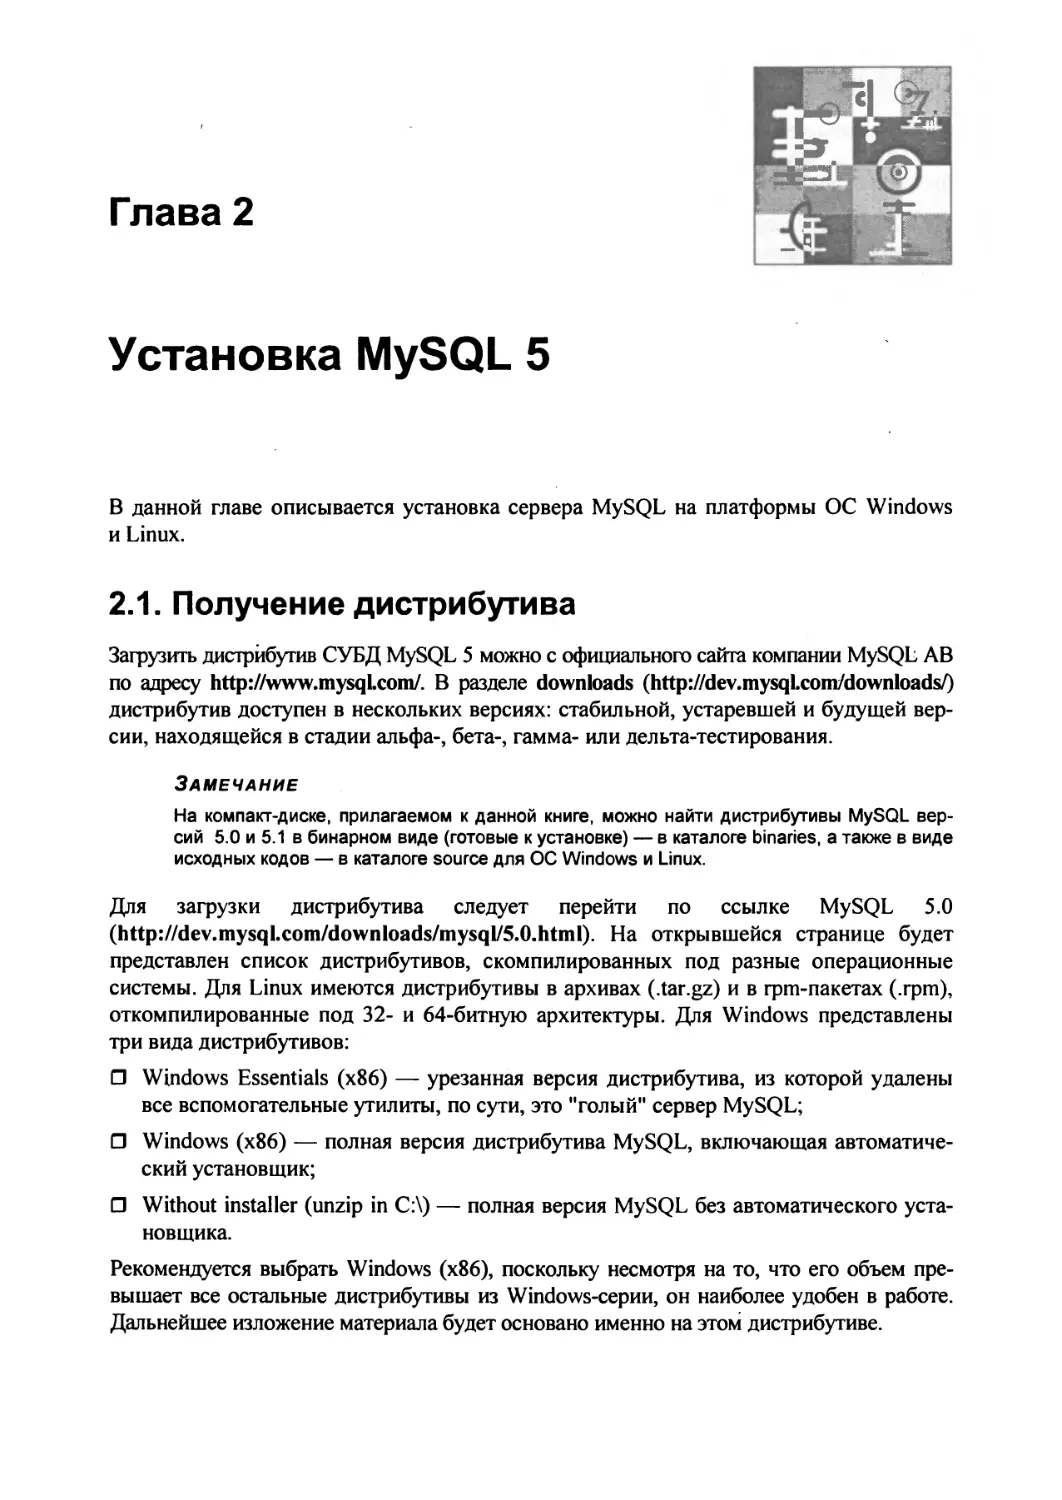 Глава 2. Установка MySQL 5